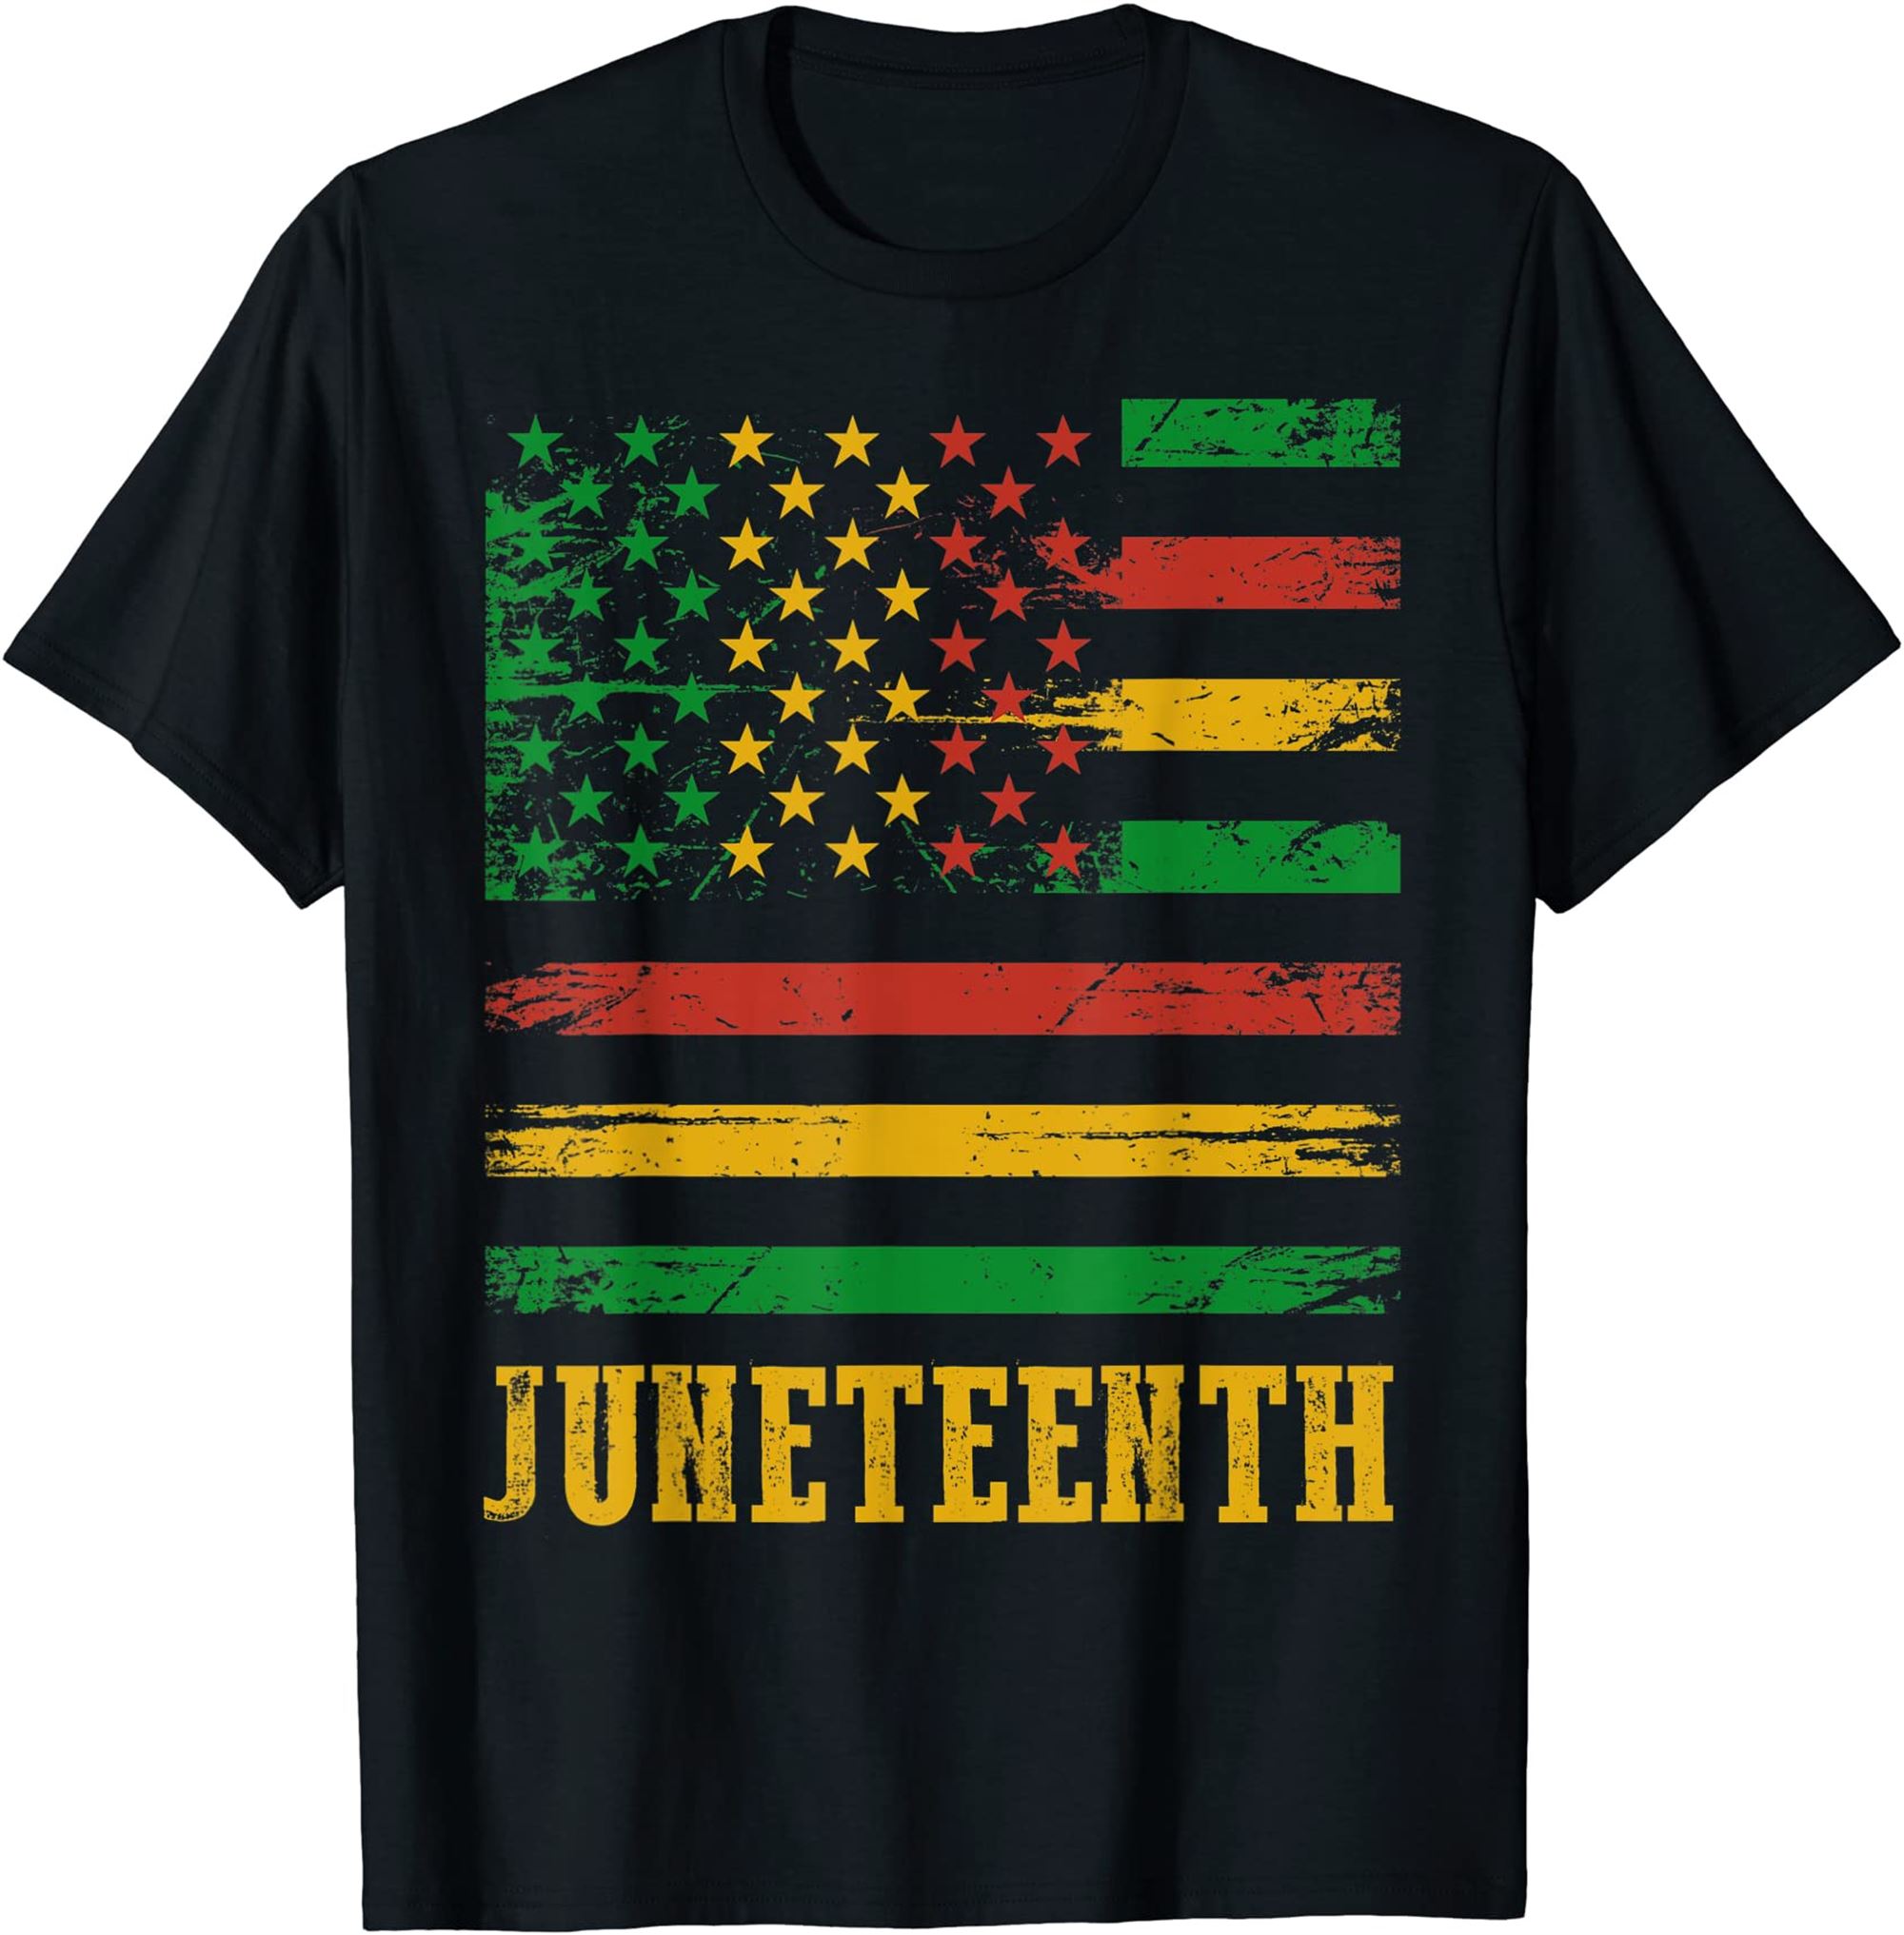 Happy Juneteenth 1865 American Flag Melanin Black Pride T-shirt Full Size Up To 5xl